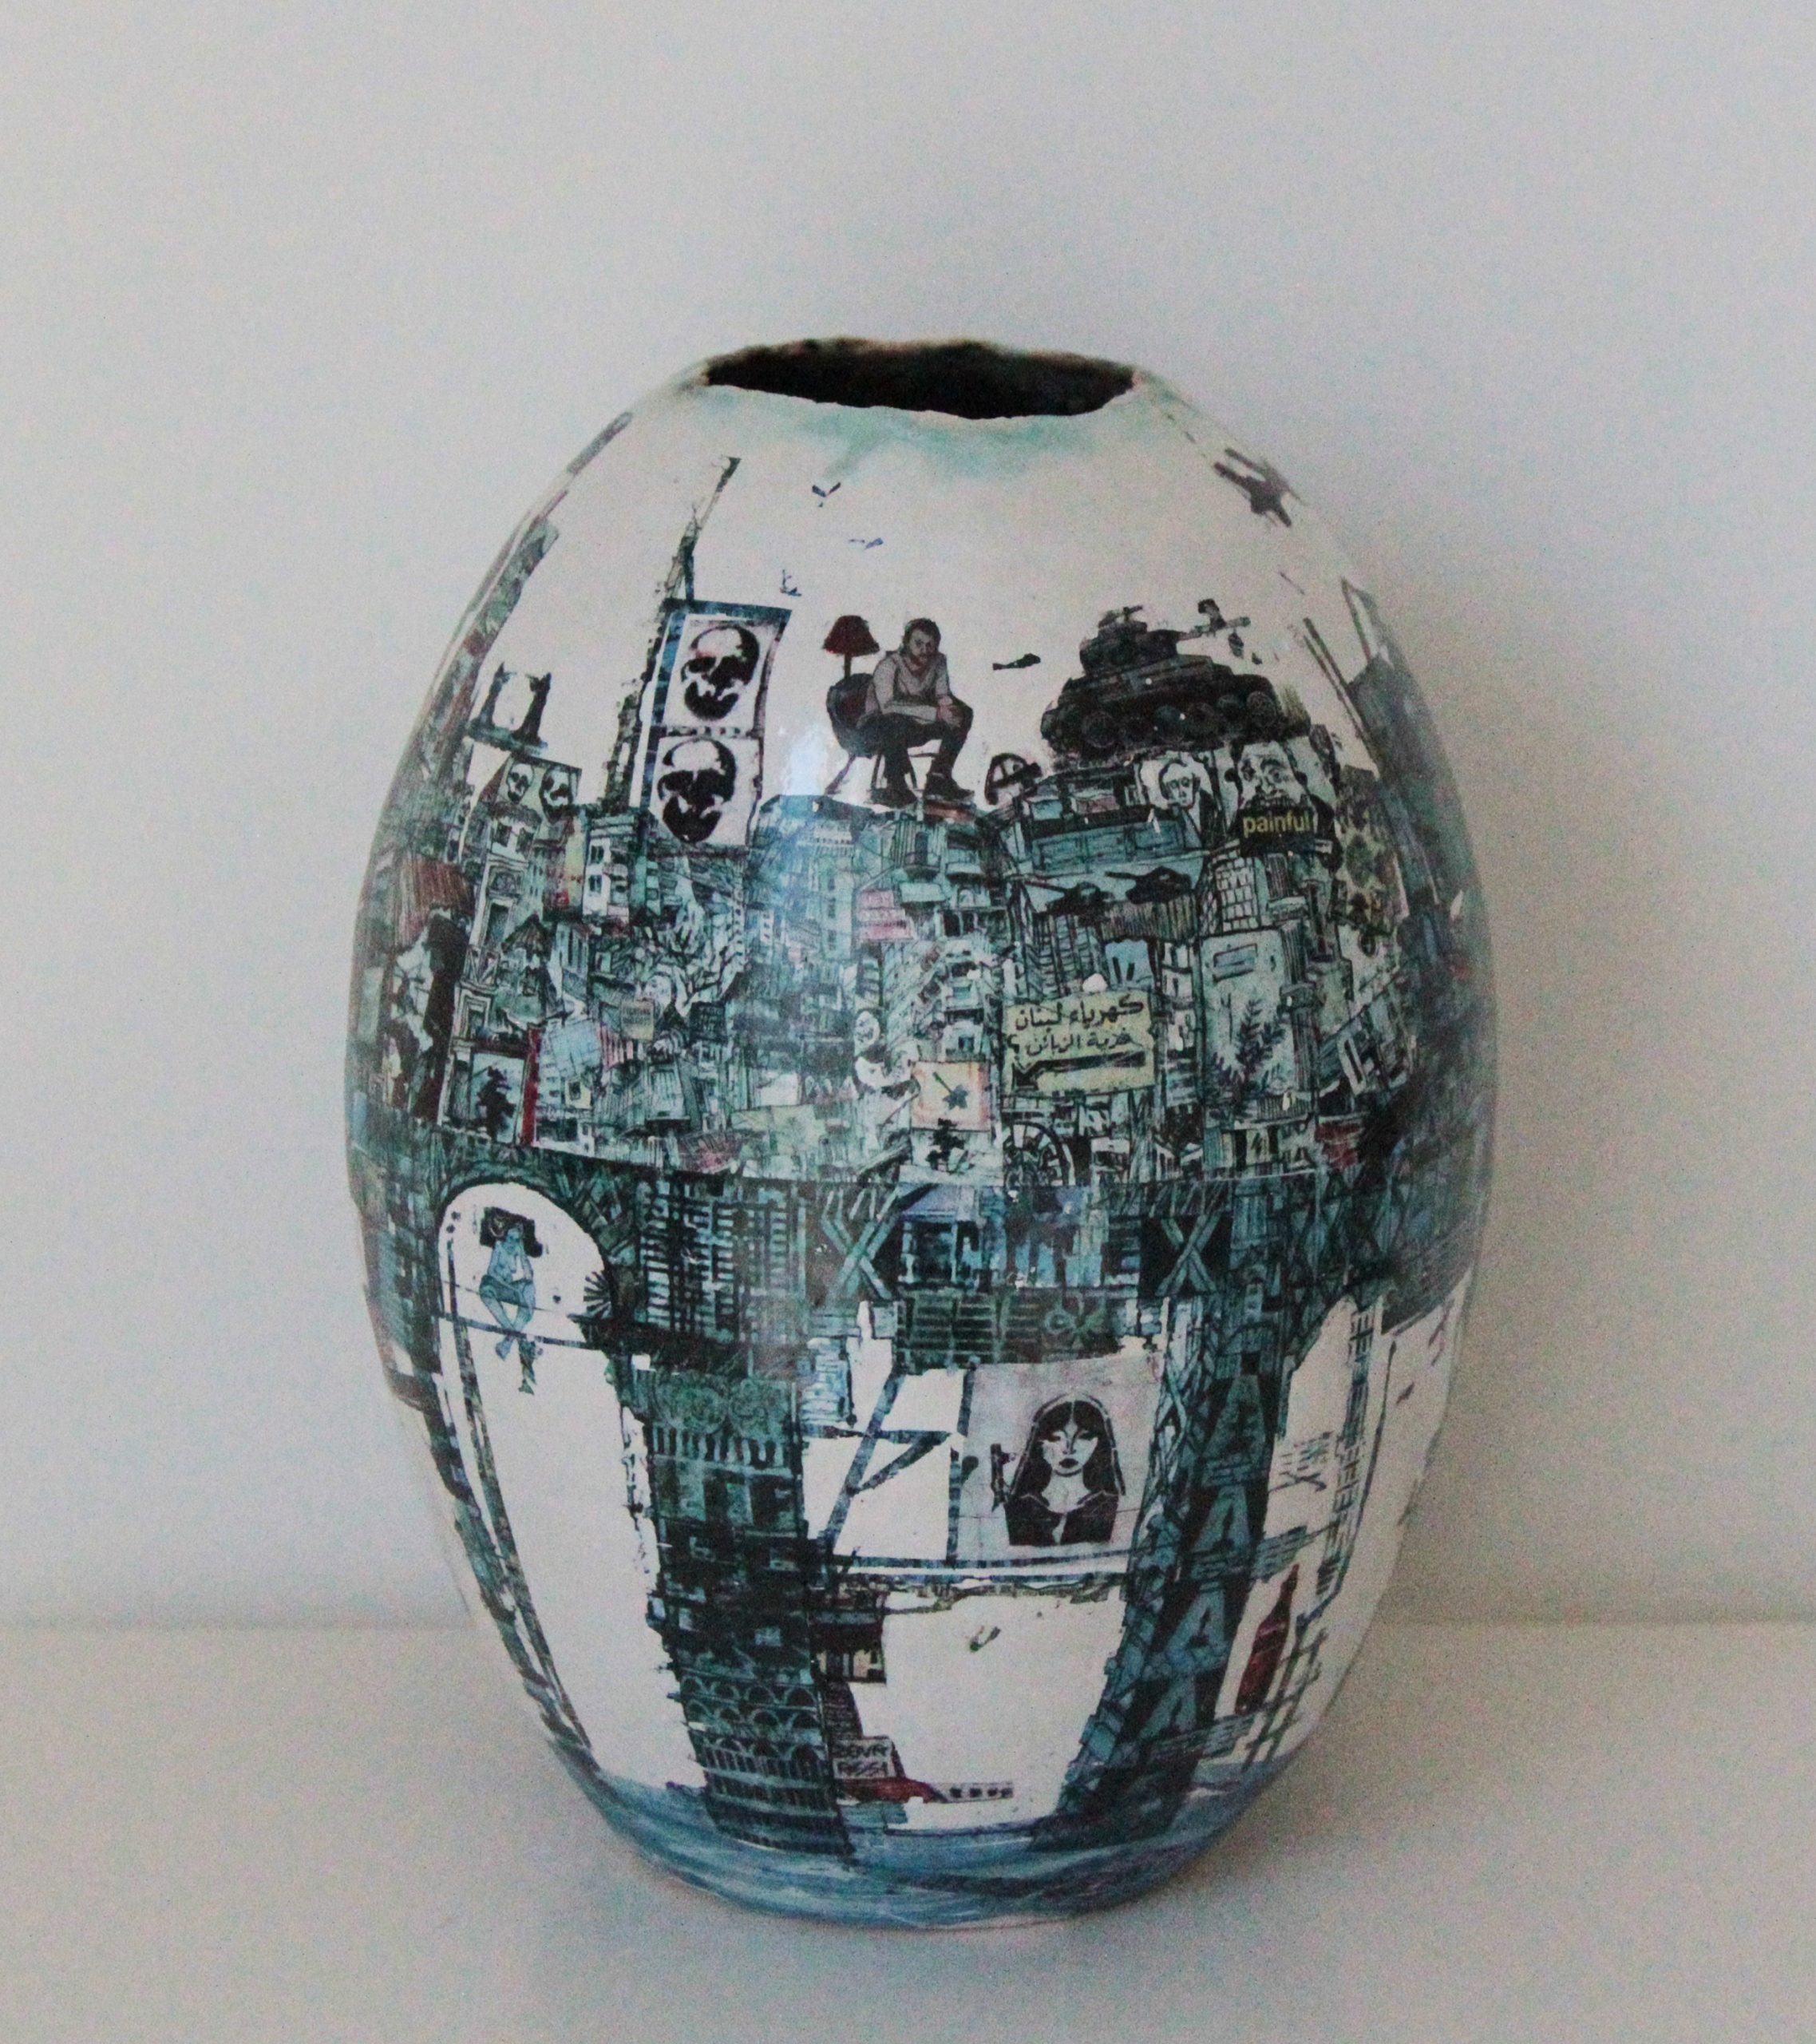 Zena Assi- Beirut I Love You- Hand built ceramics with glazing and transfers- 23 x 17 x 17 cm- 2022 2023